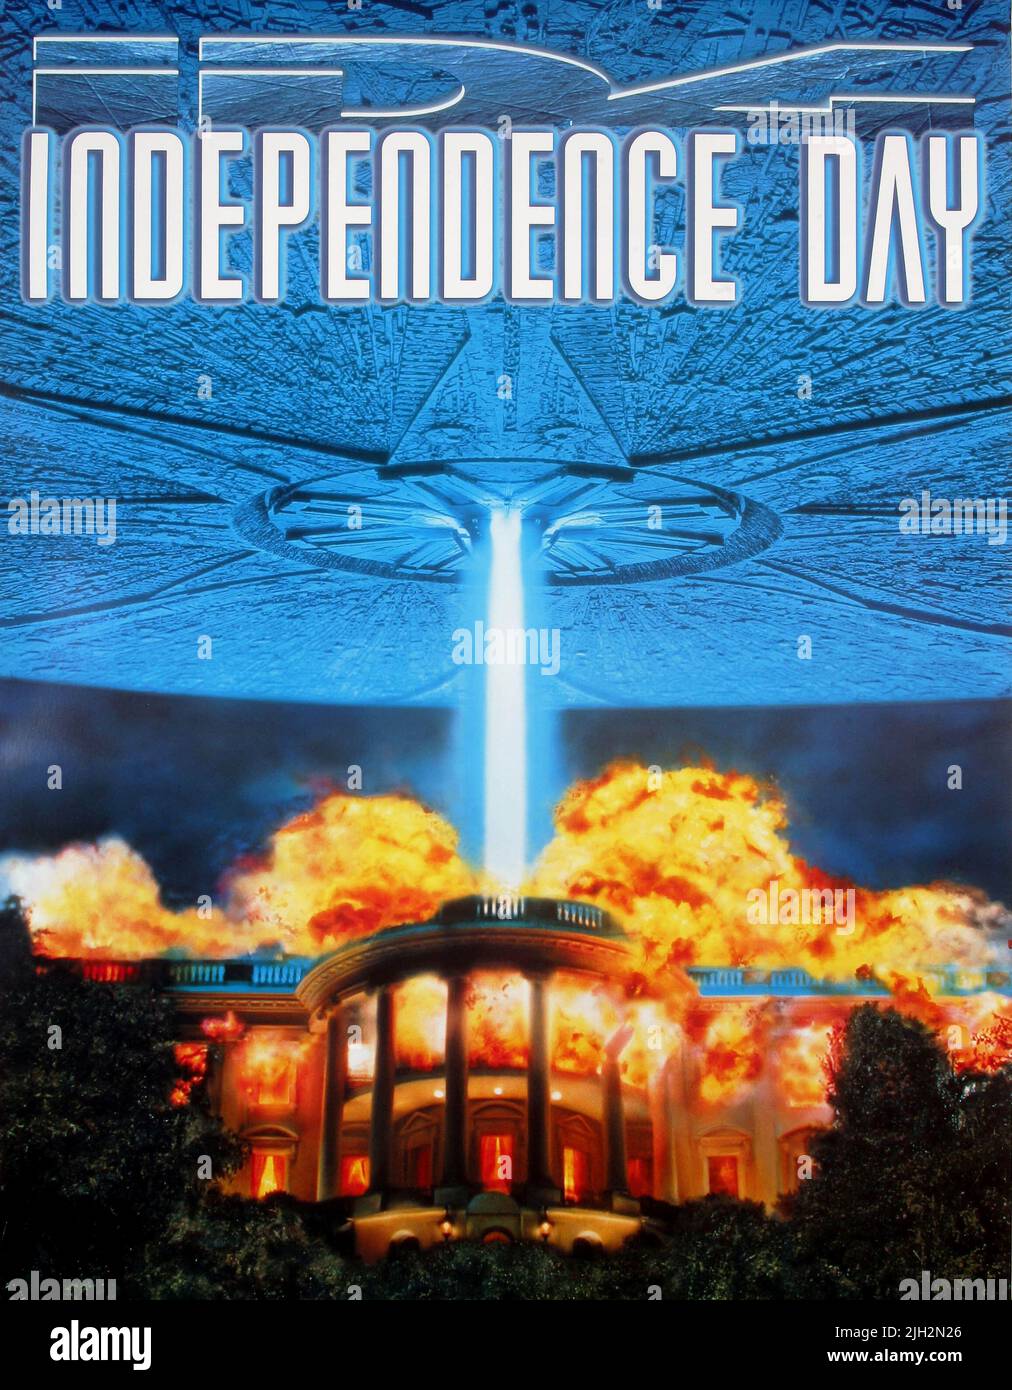 Affiche de film Independence day